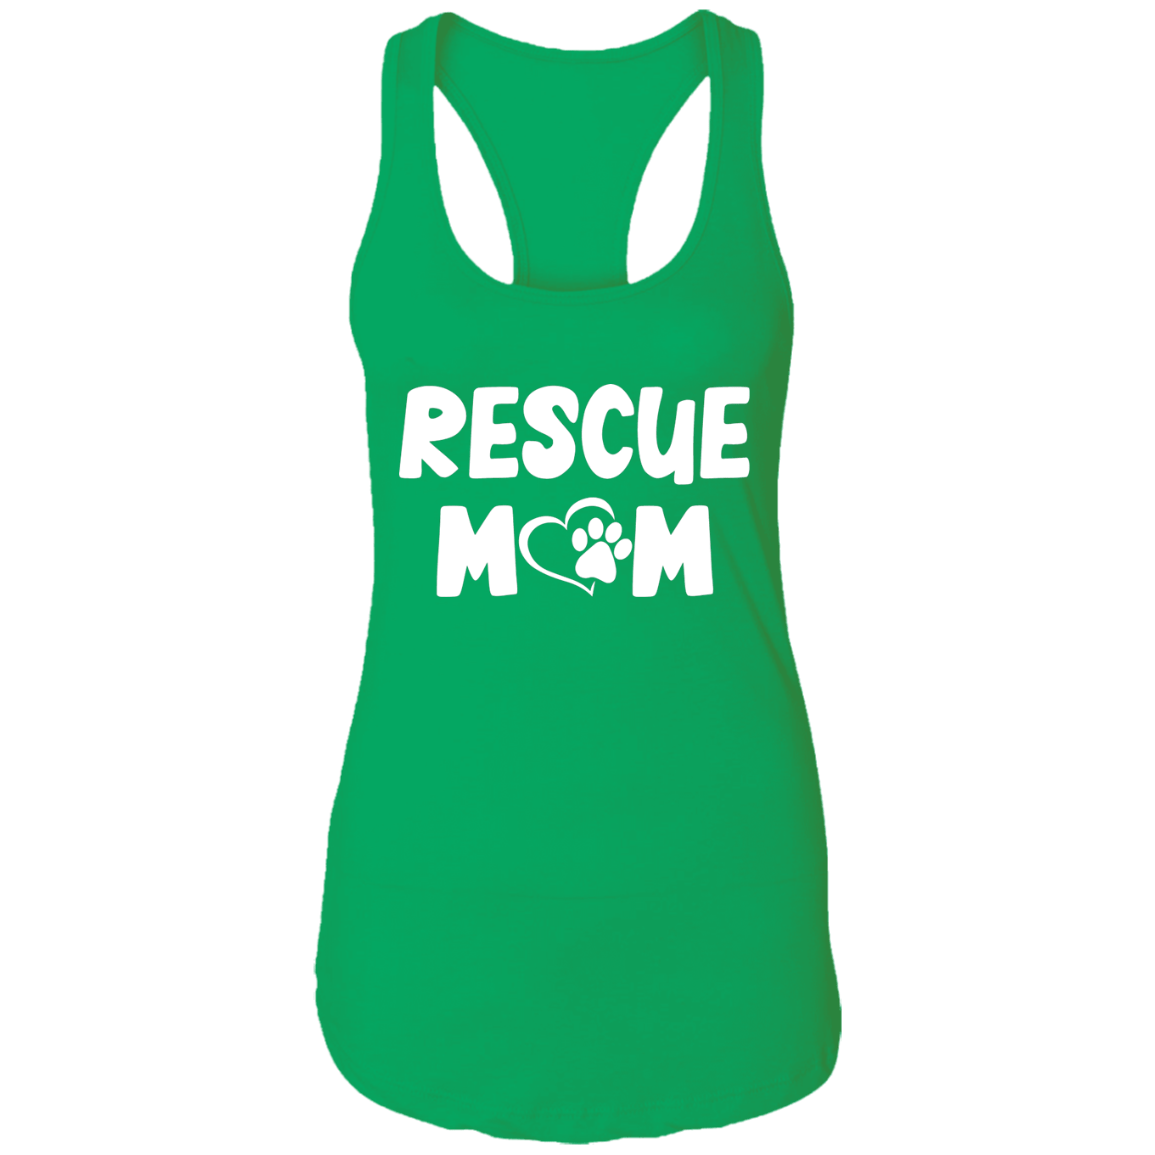 Rescue Mom - Ladies Racer Back Tank.